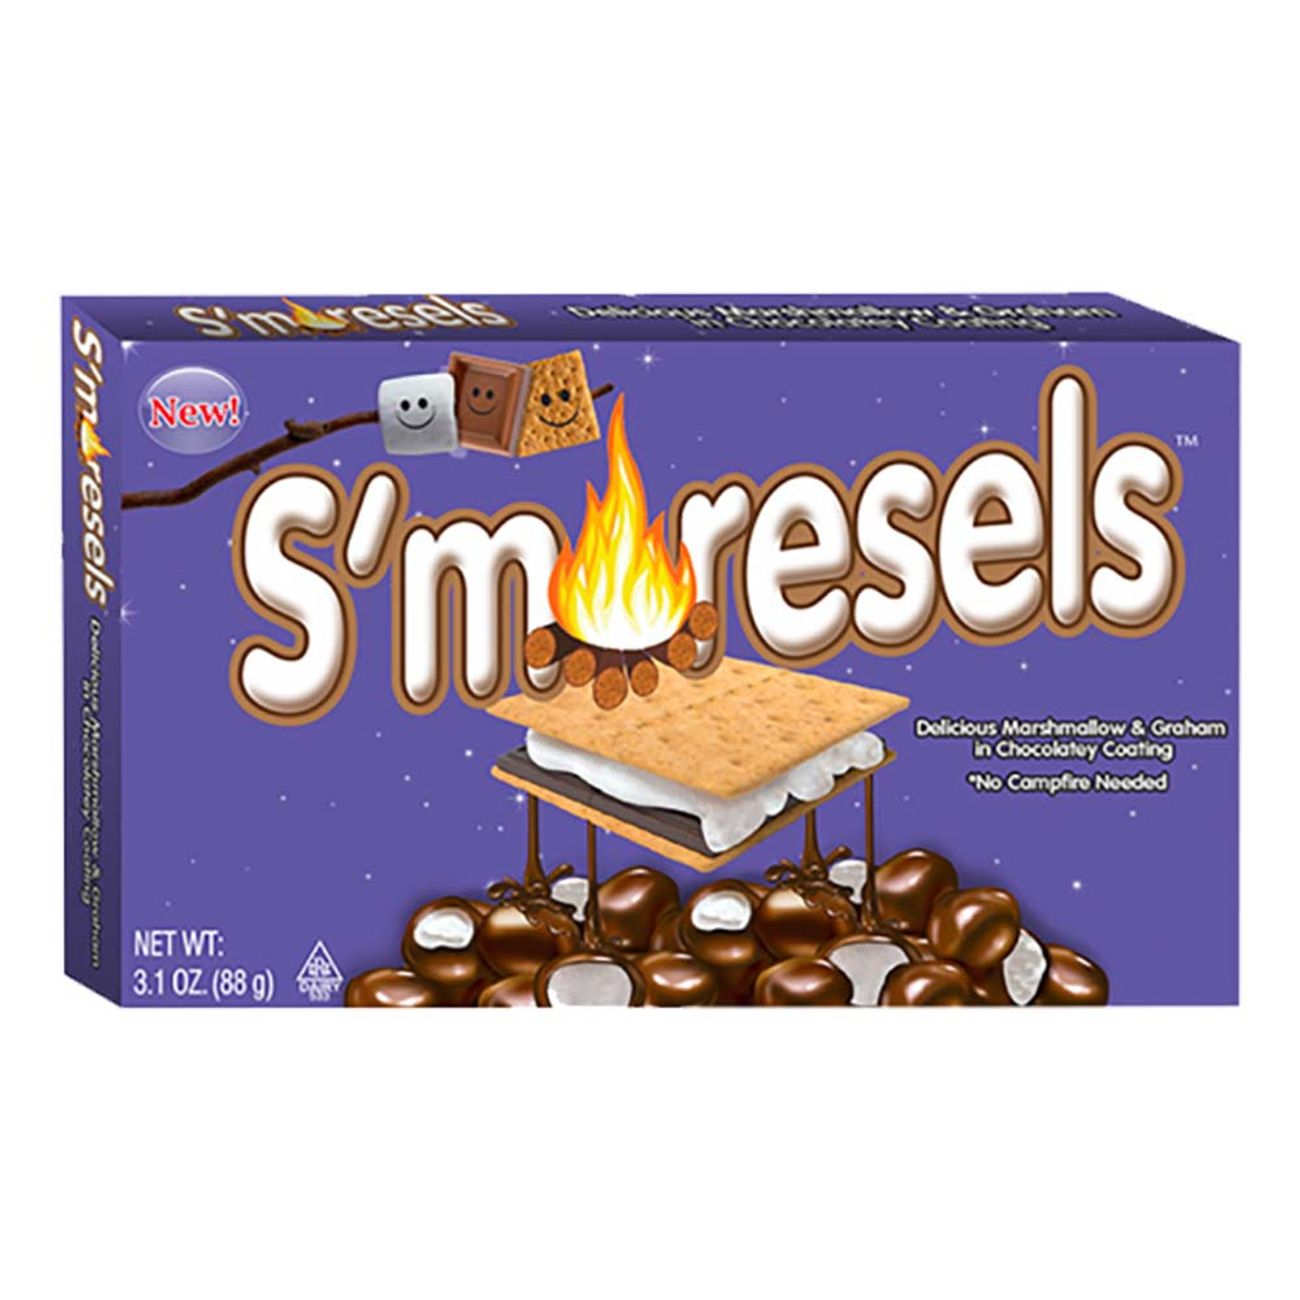 cookie-dough-bites-smoresels-marshmallow-graham-cracker-94037-1